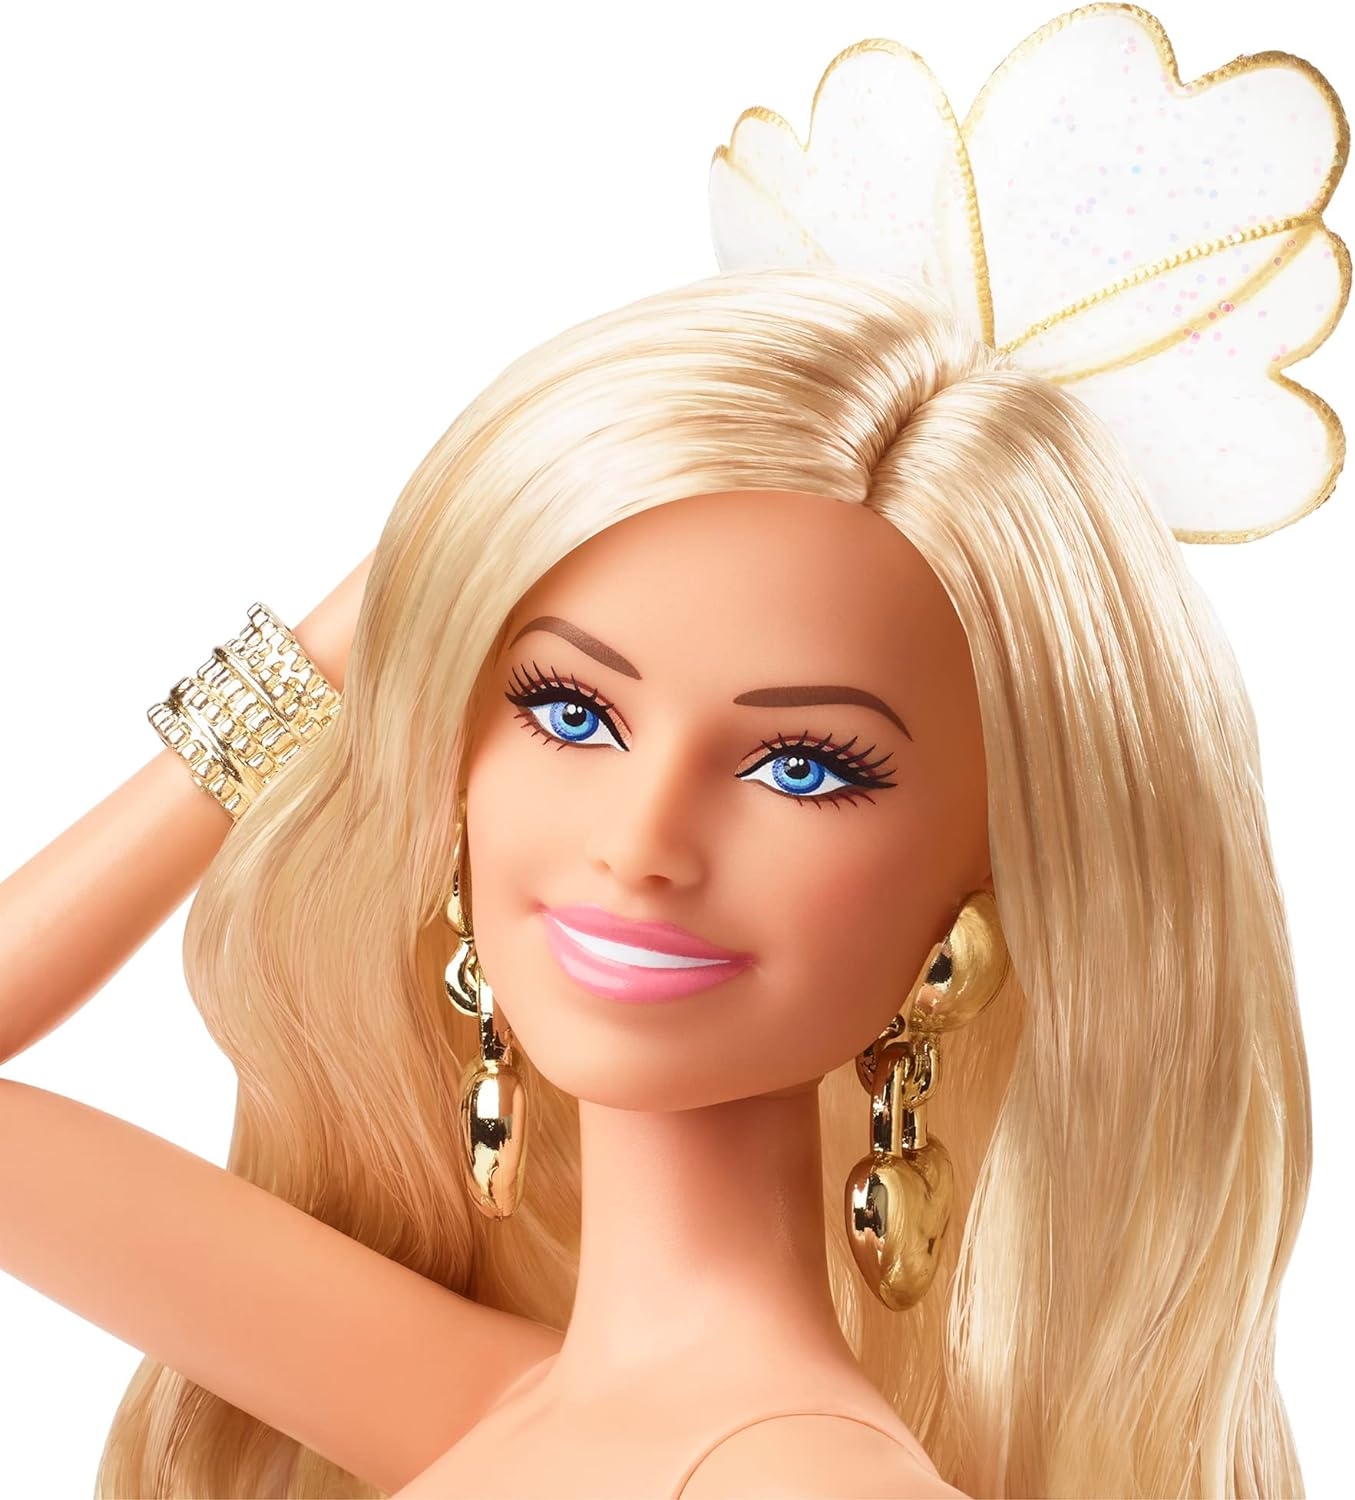 Barbie%20Movie%20Barbie%20Gold%20Tulumlu%20Bebek%20HPJ99